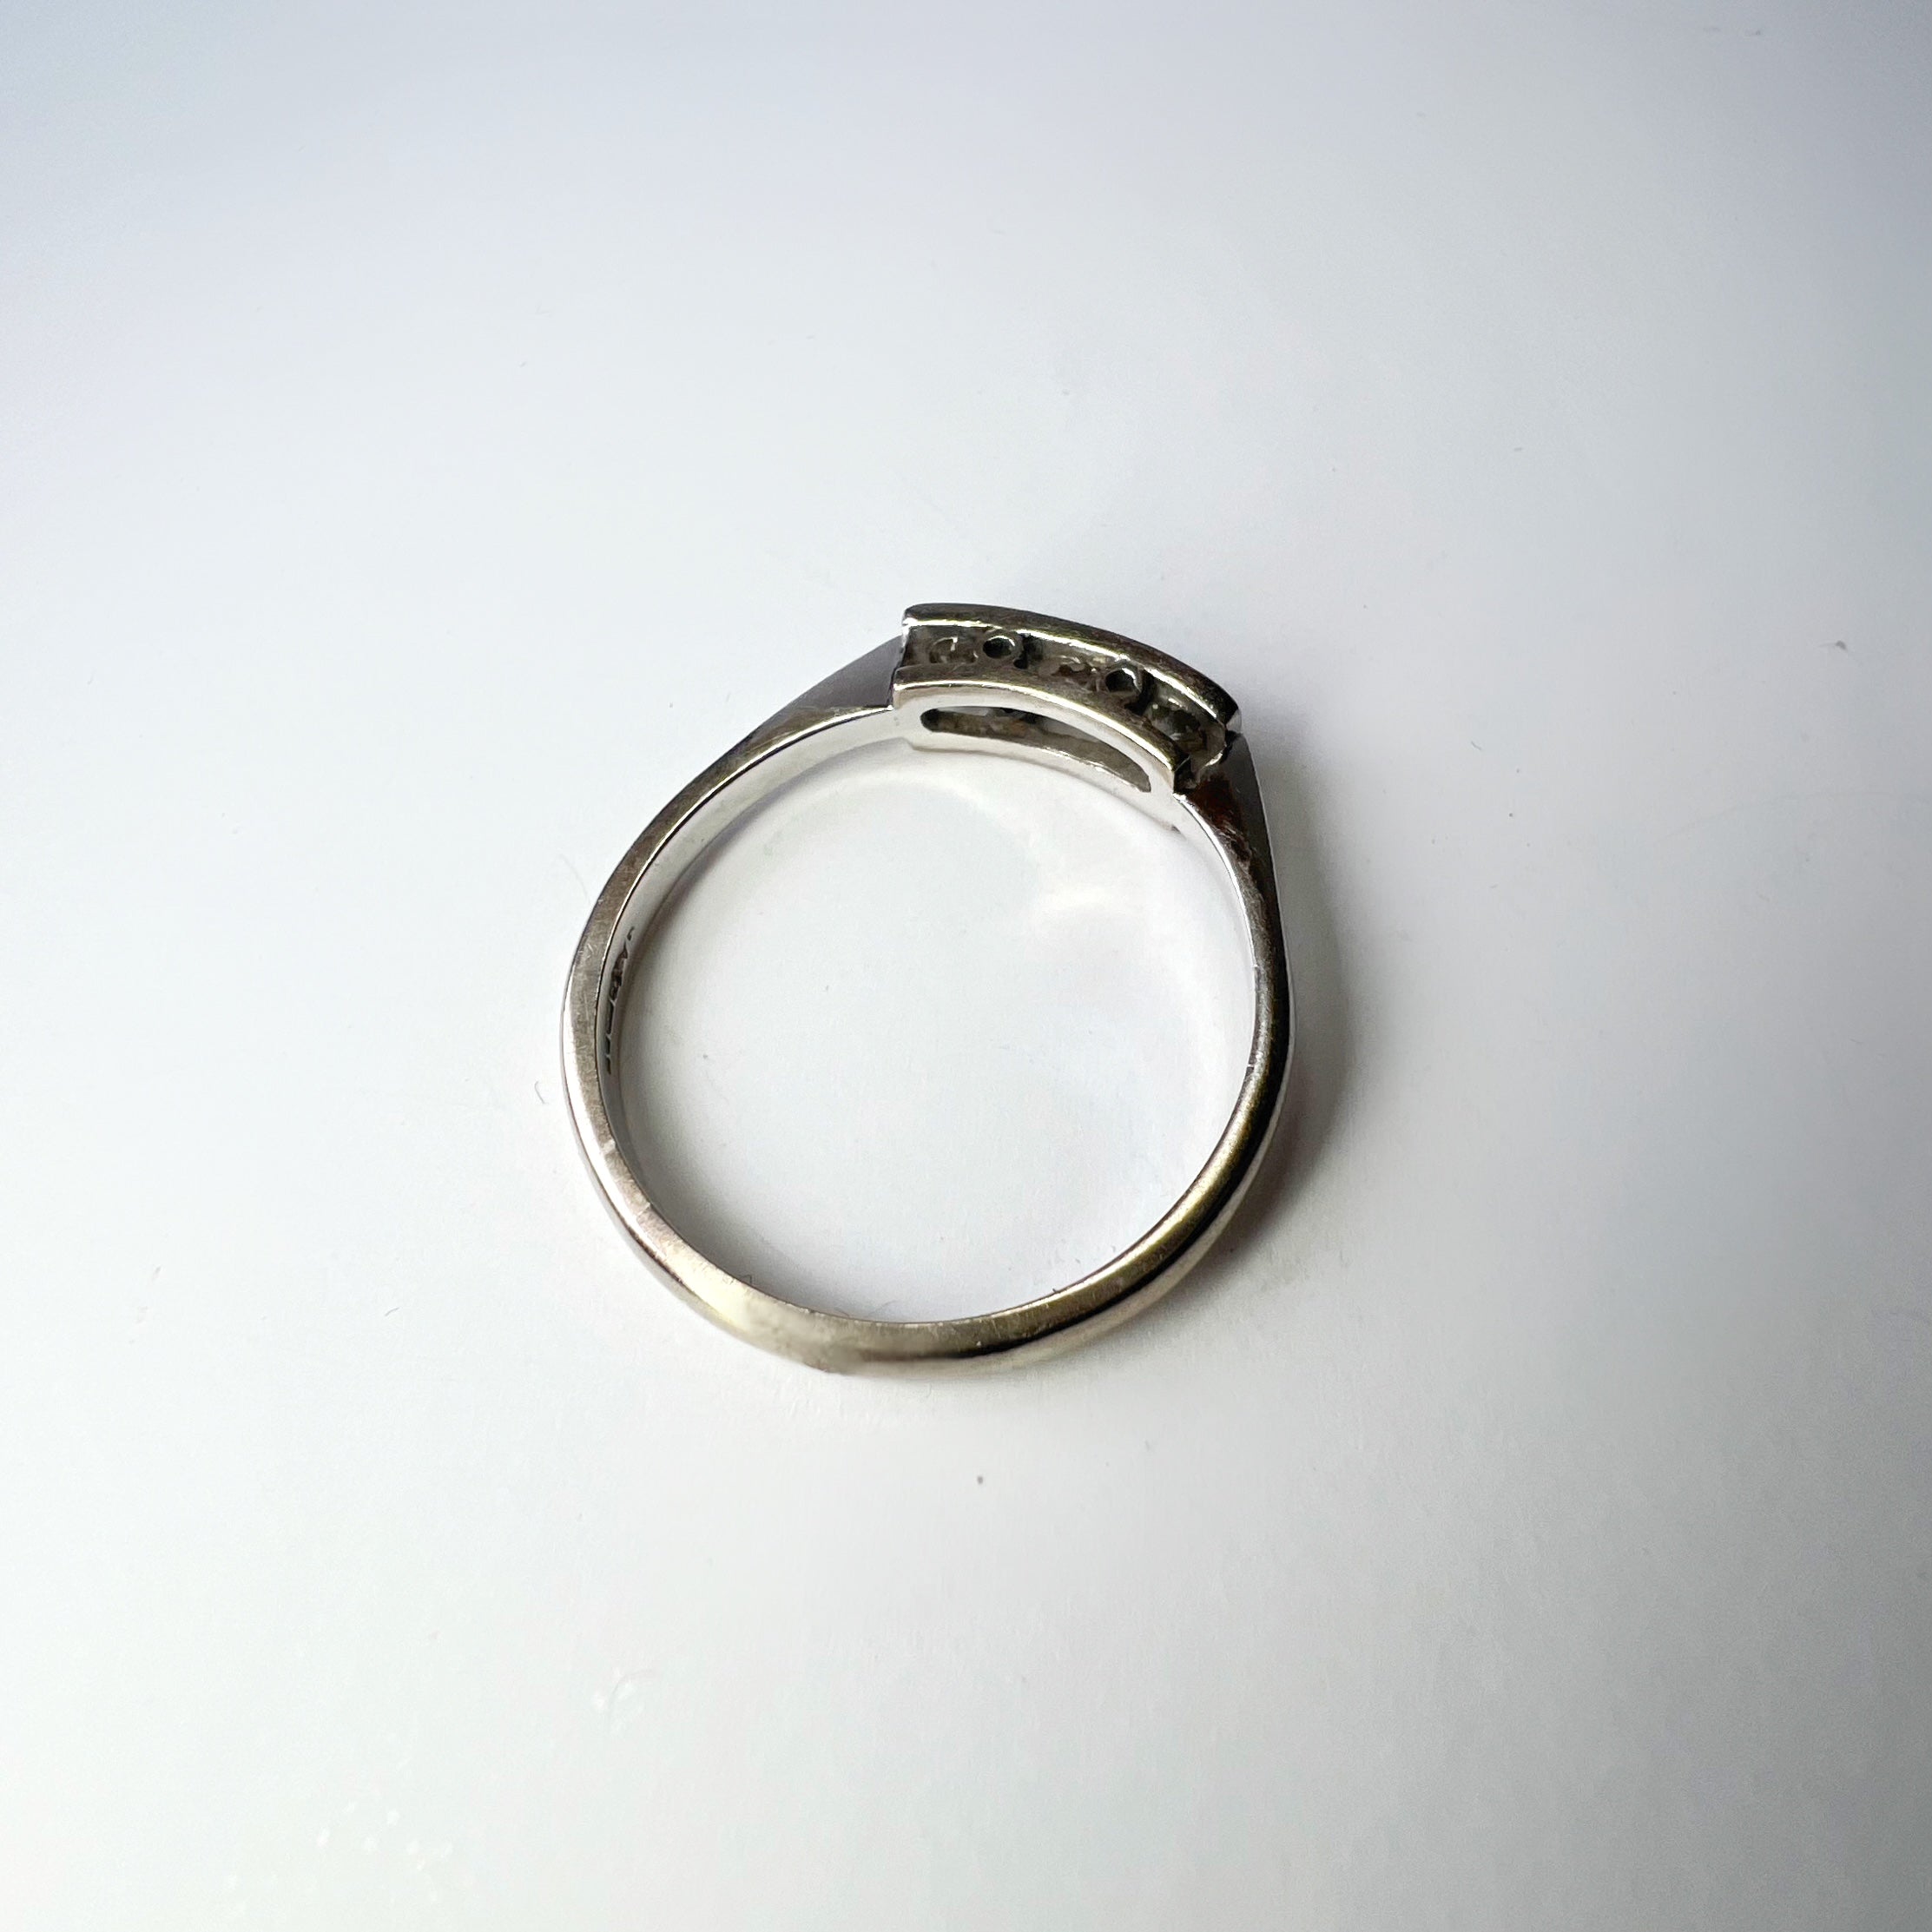 Vintage 3 Stone 0.60ct Diamond Ring